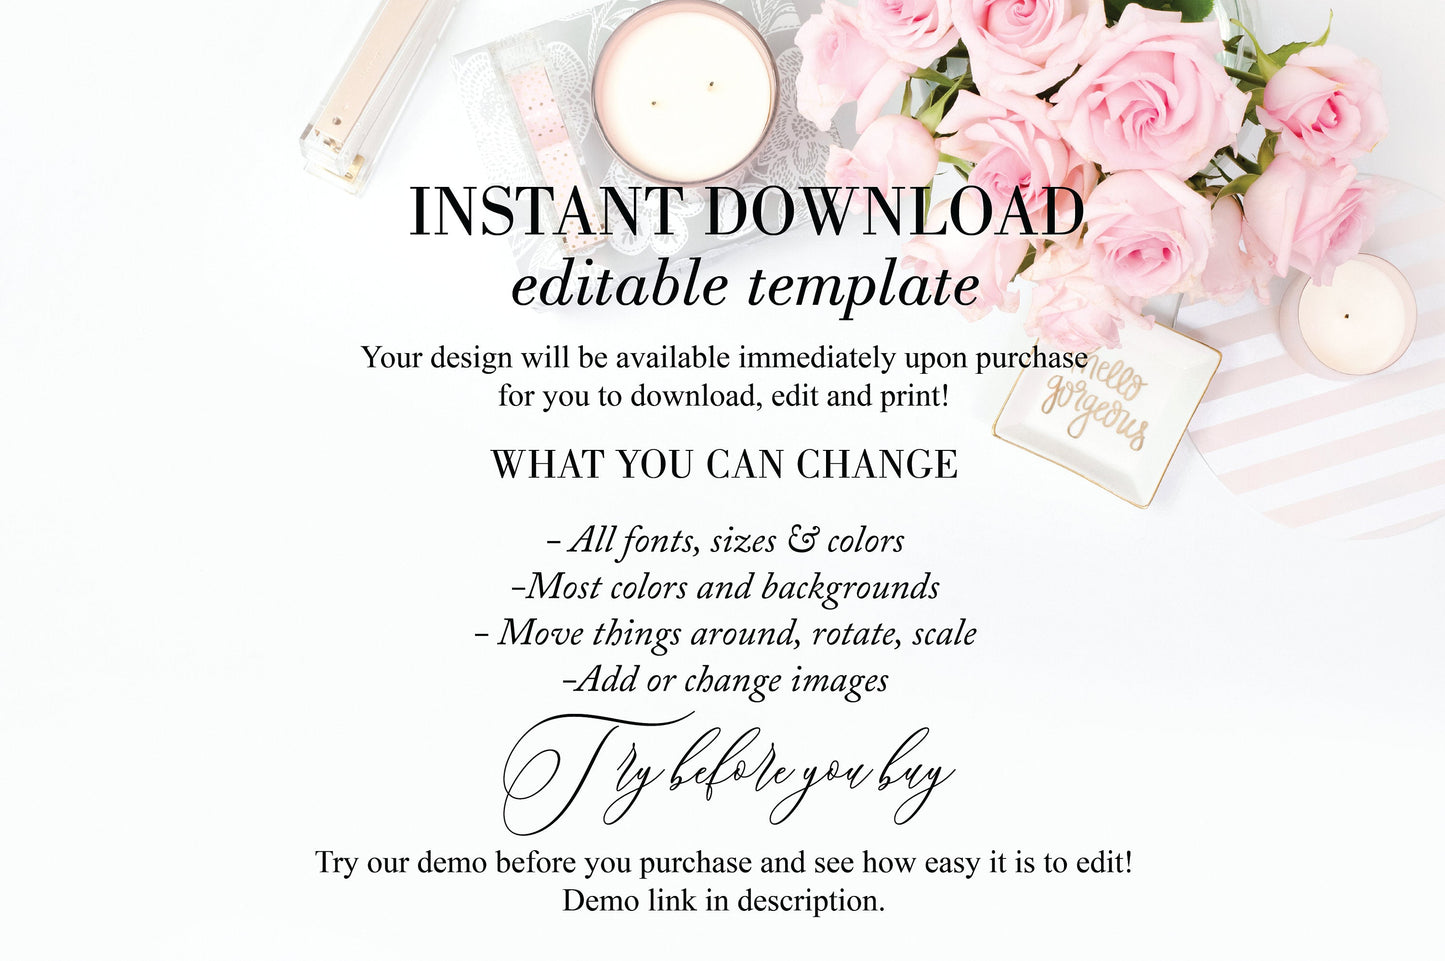 Printable Greenery Wedding Invitation Set Editable Template, DIY Instant Download Invites, Invitation Suite, 100% Editable- Abi WEDDING INVITATION SETS SAVVY PAPER CO